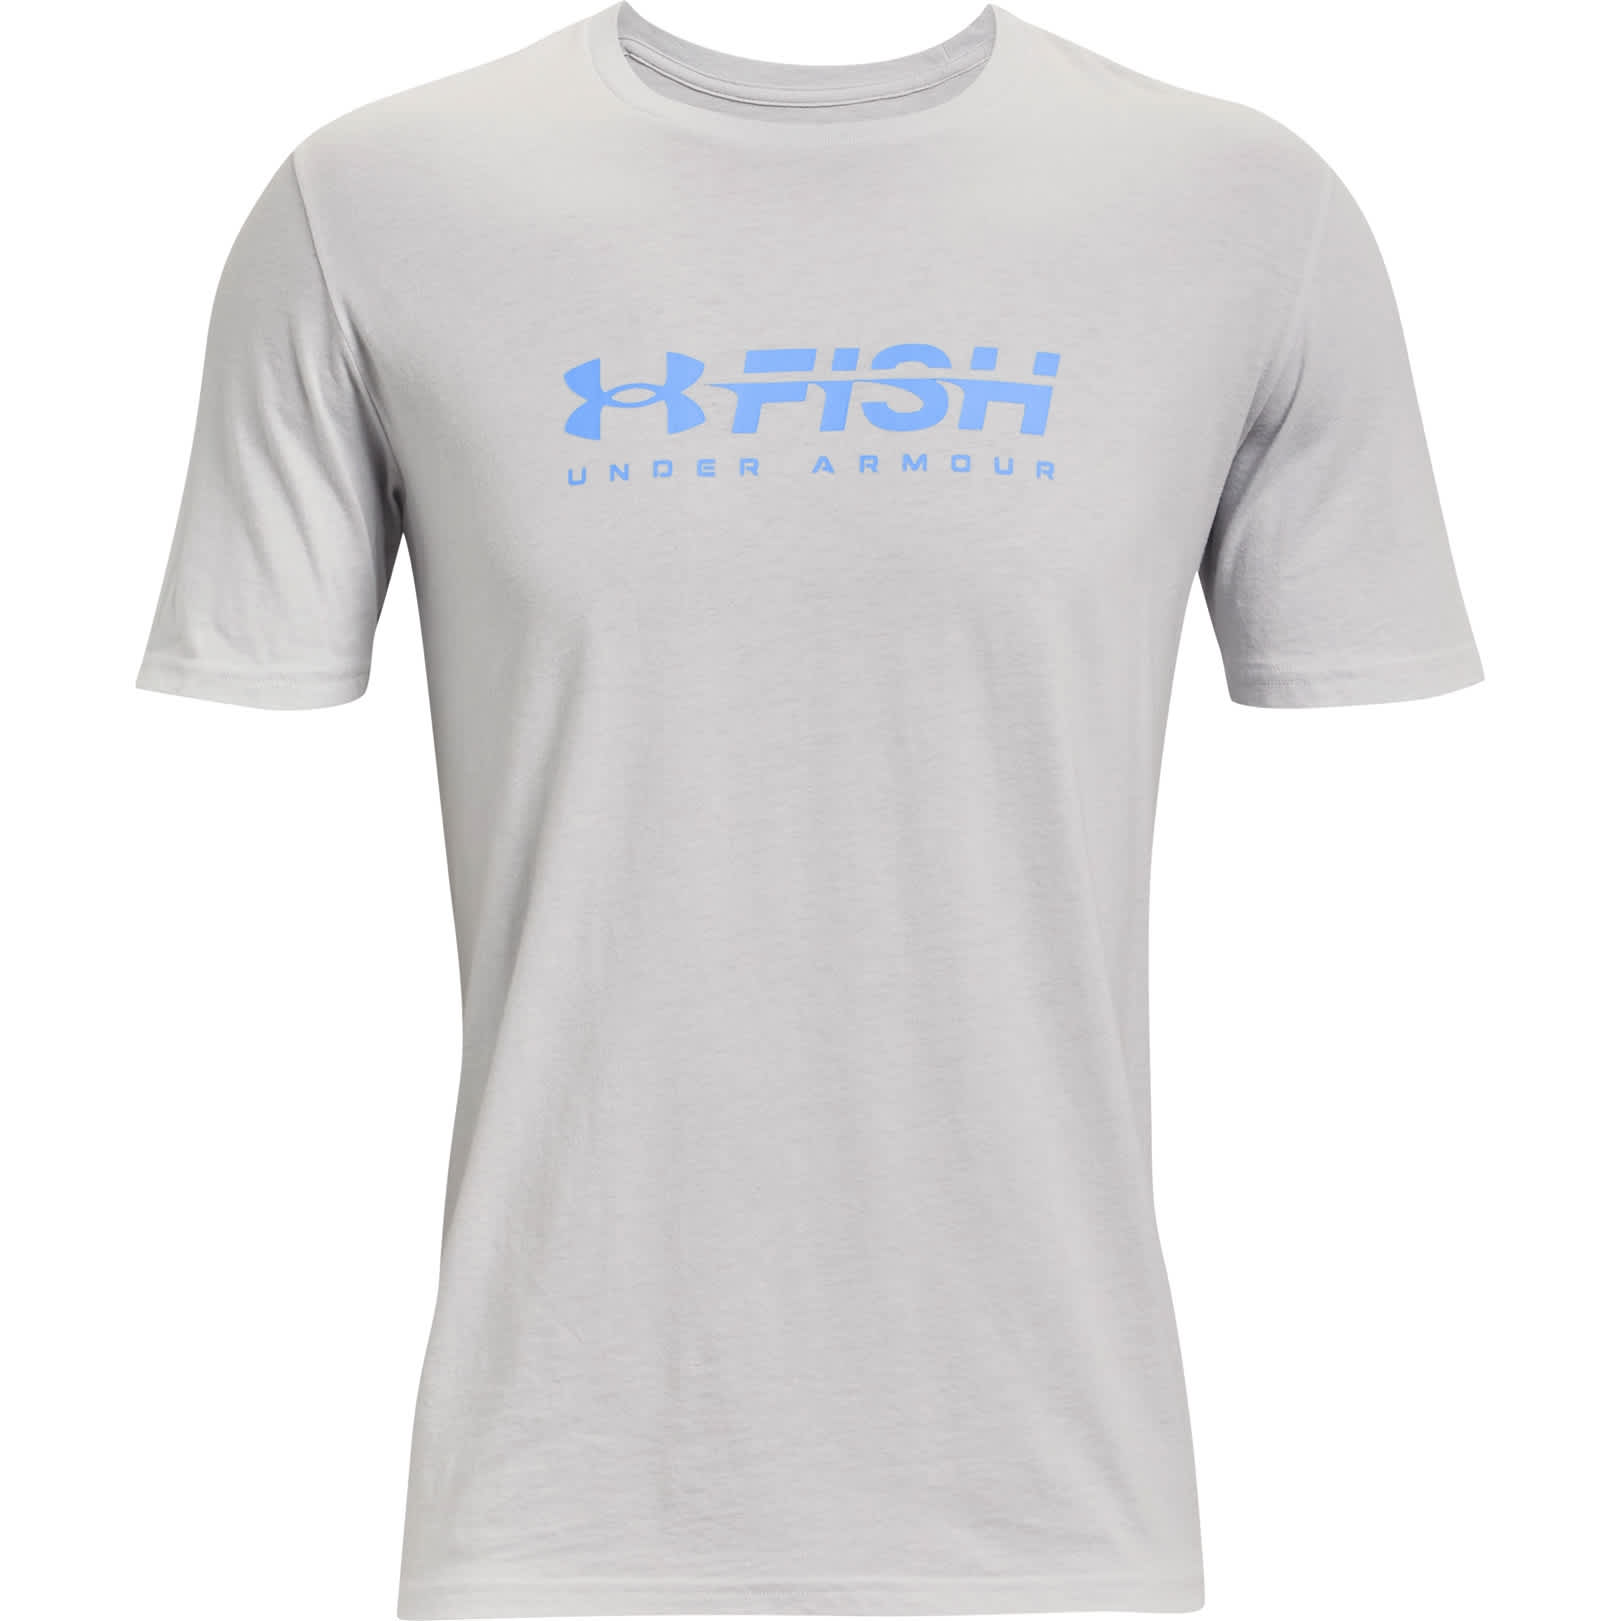 Under Armour Fish Strike T-Shirt - 1362866 015